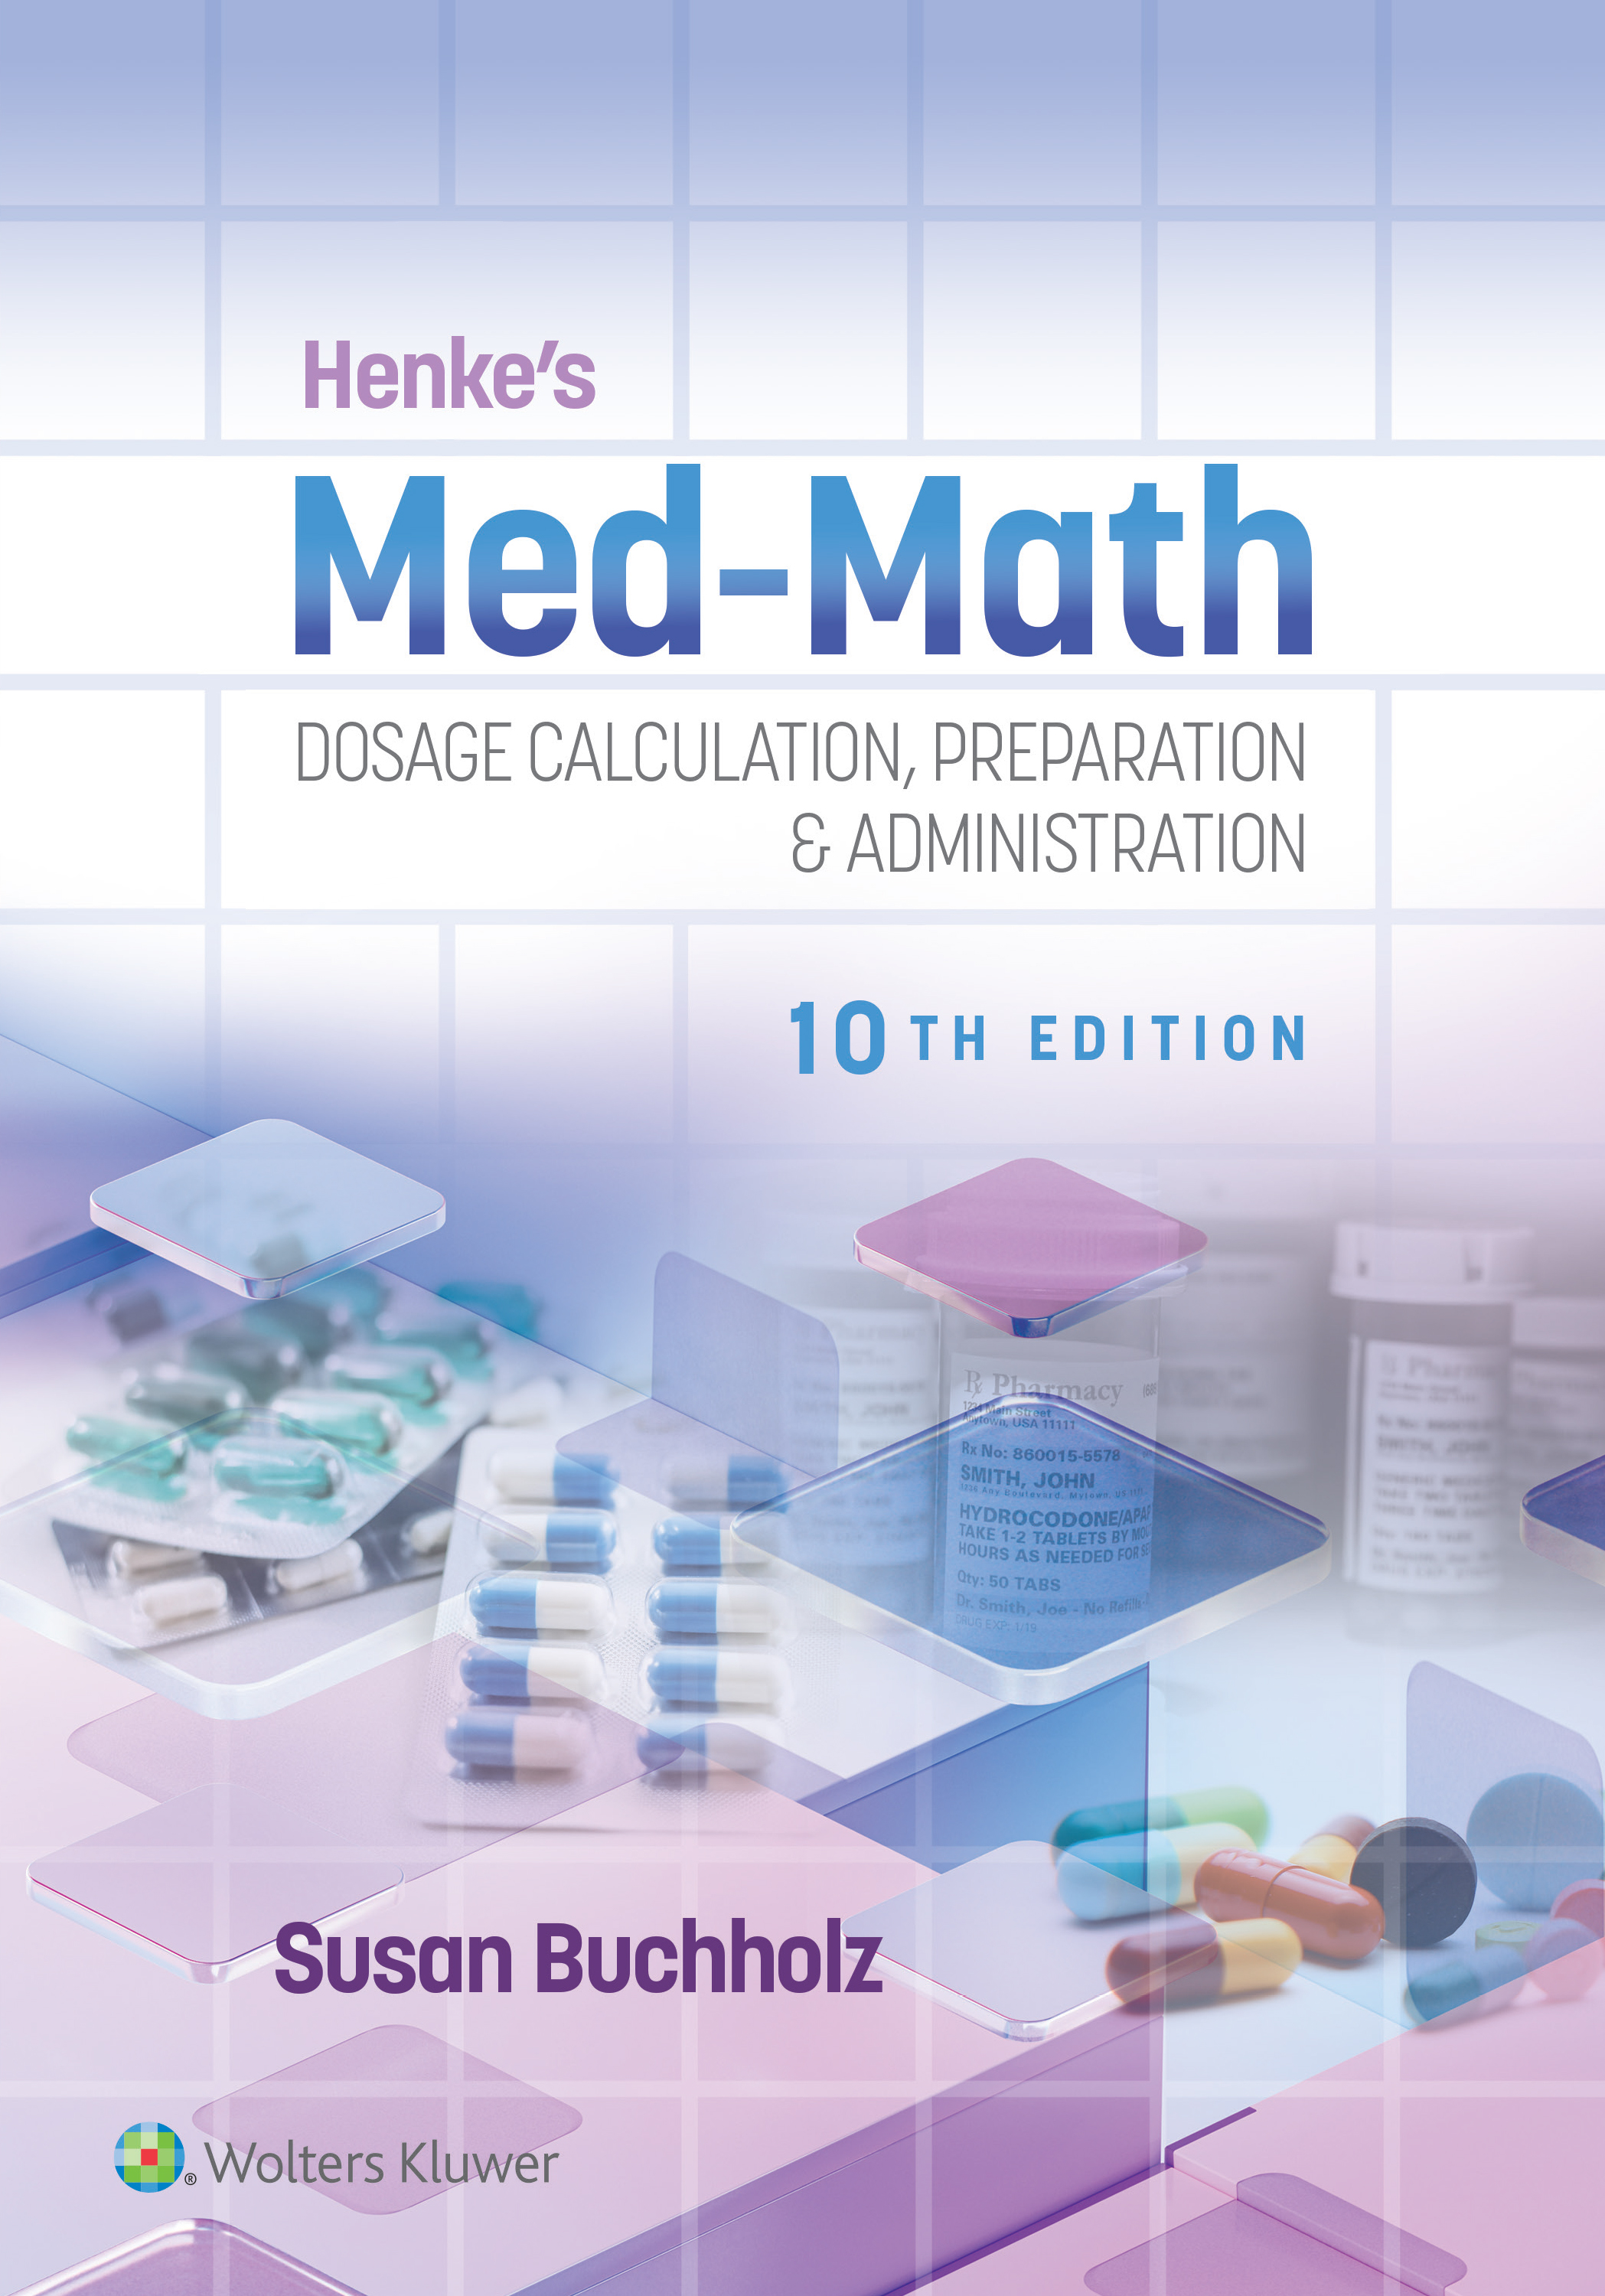 Henke’s Med-Math: Dosage Calculation, Preparation & Administration, 10th Edition